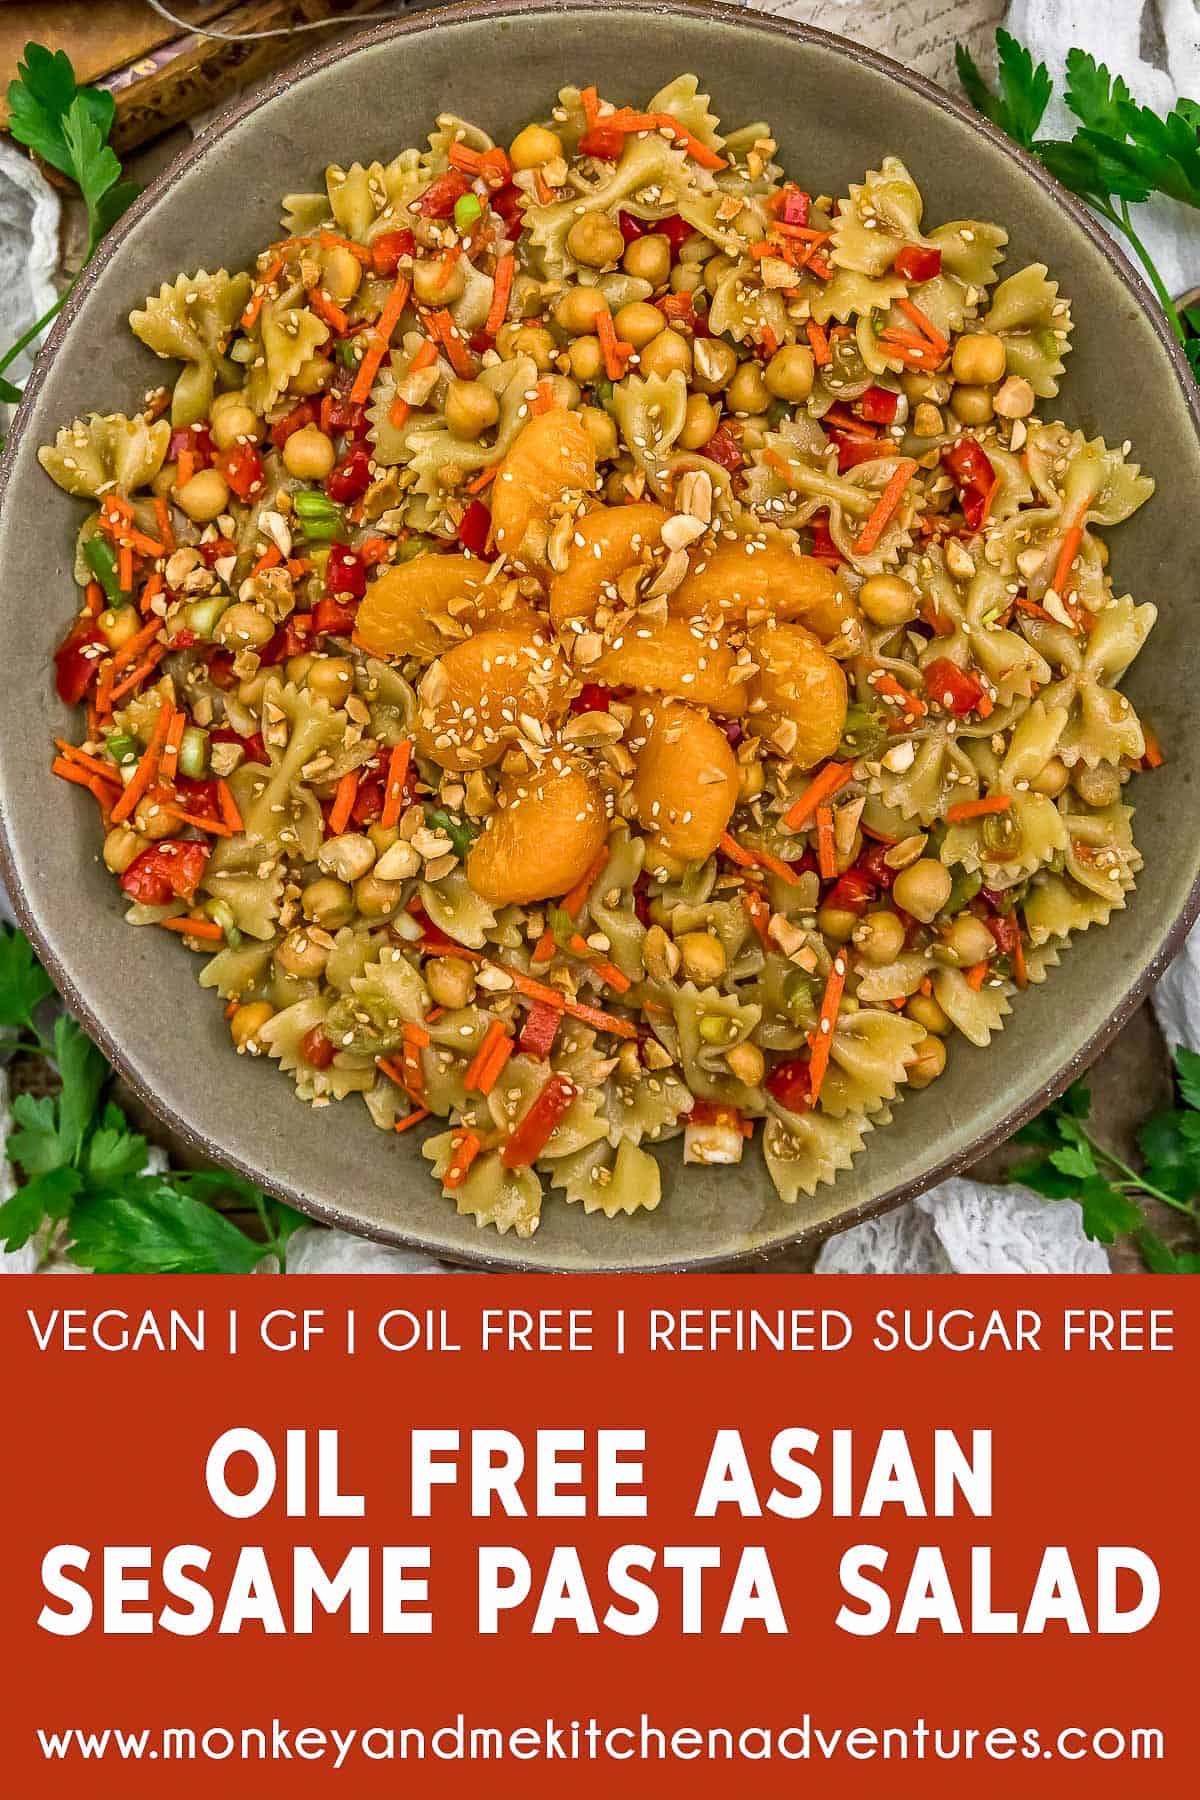 Oil Free Asian Sesame Pasta Salad with text description